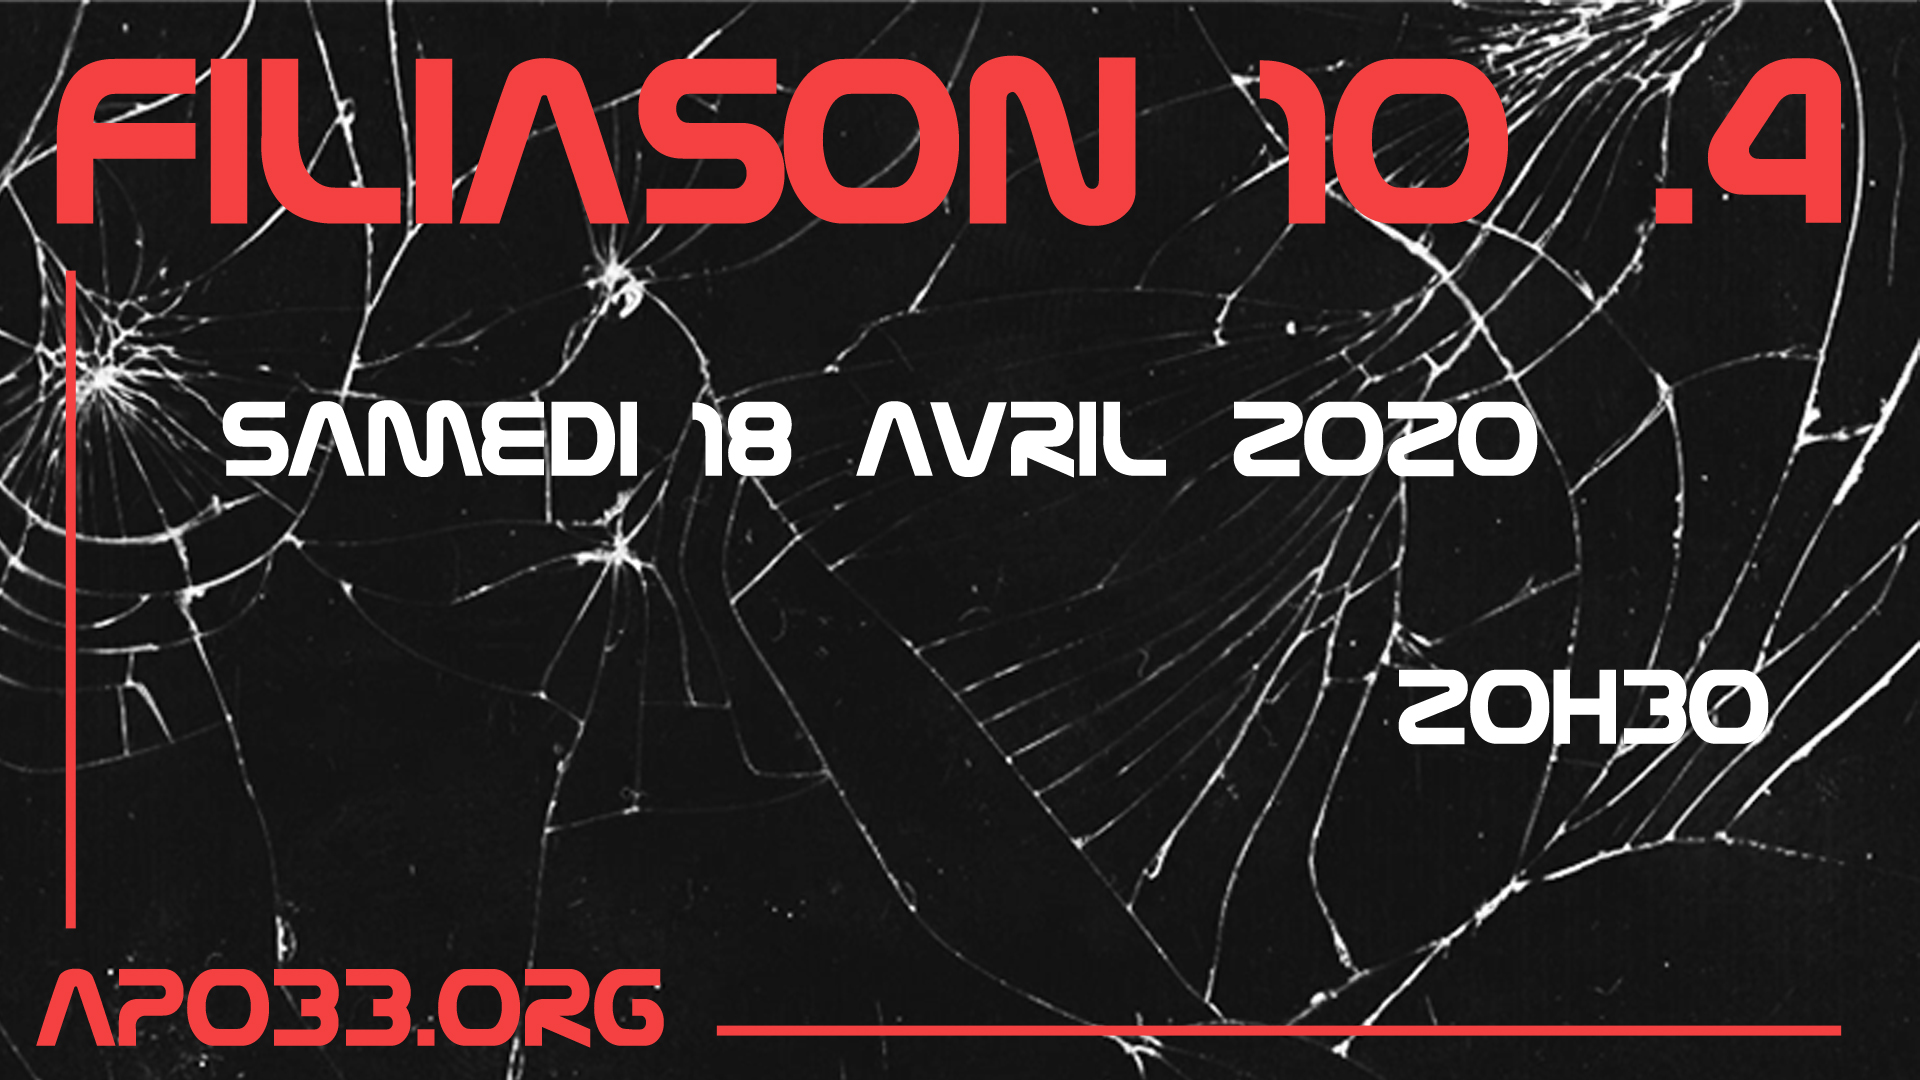 Filiason #10.4 – Samedi 18 avril 2020